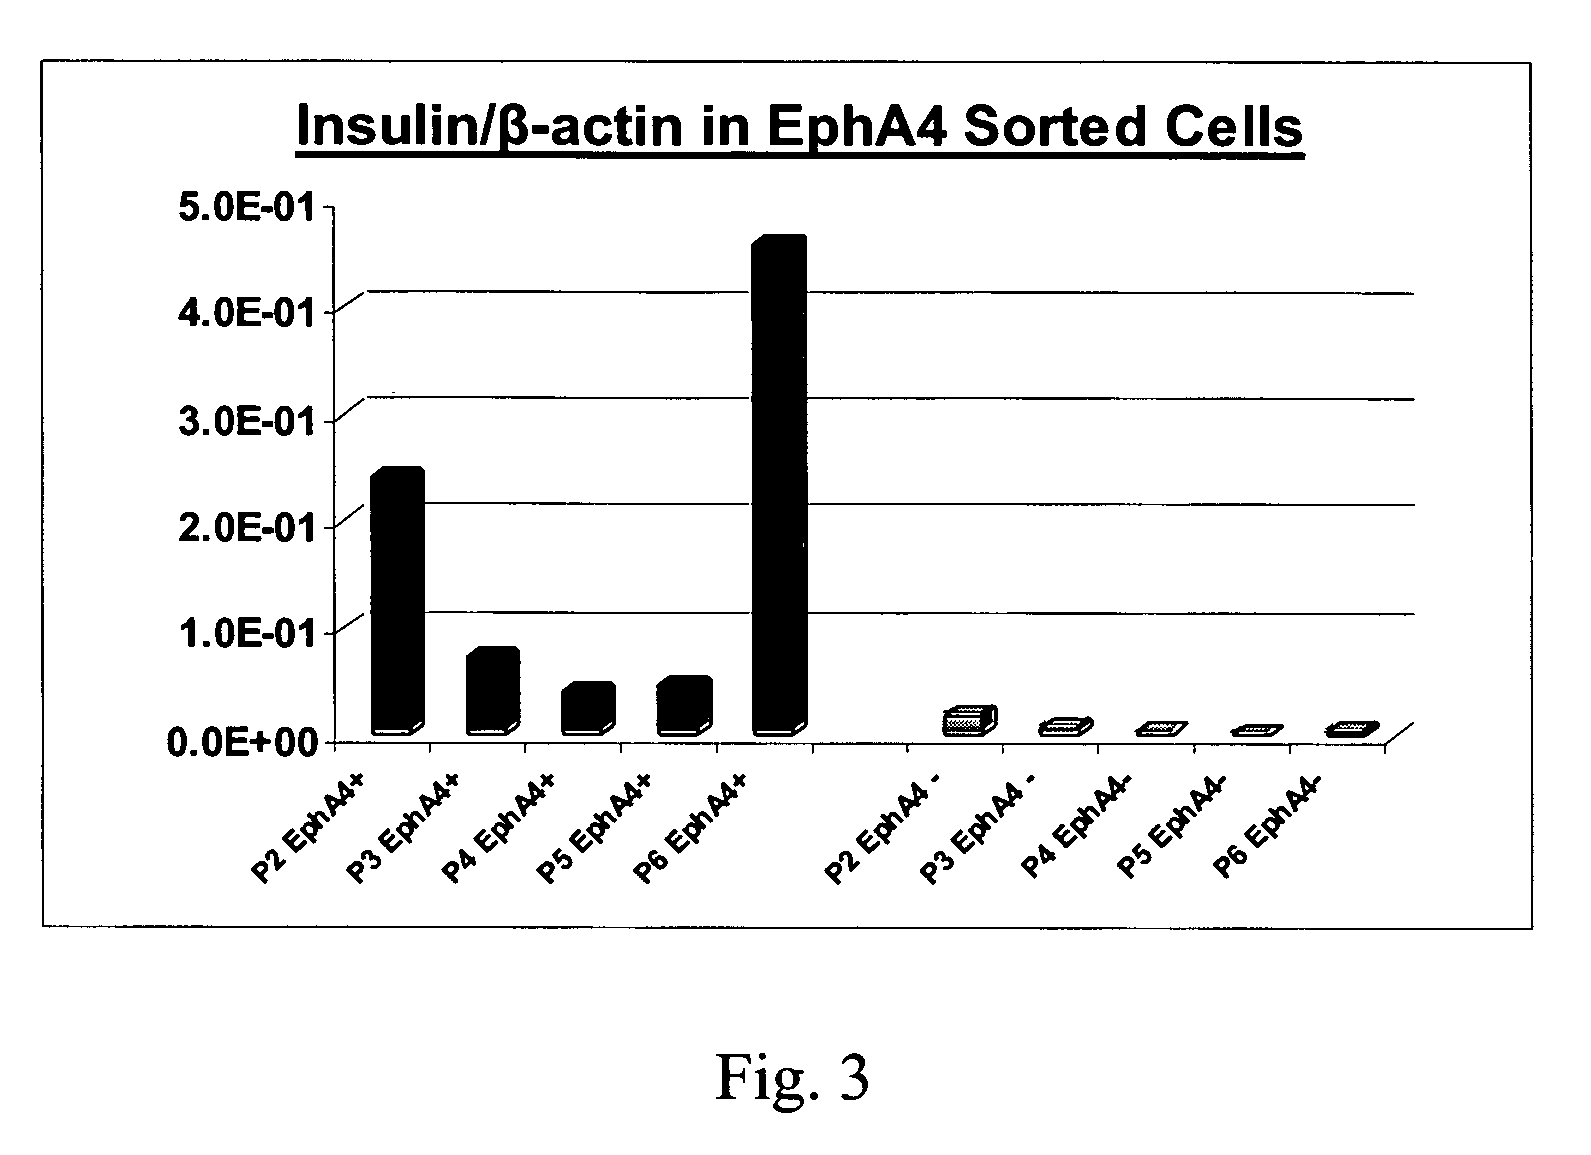 EphA4-positive human adult pancreatic endocrine progenitor cells